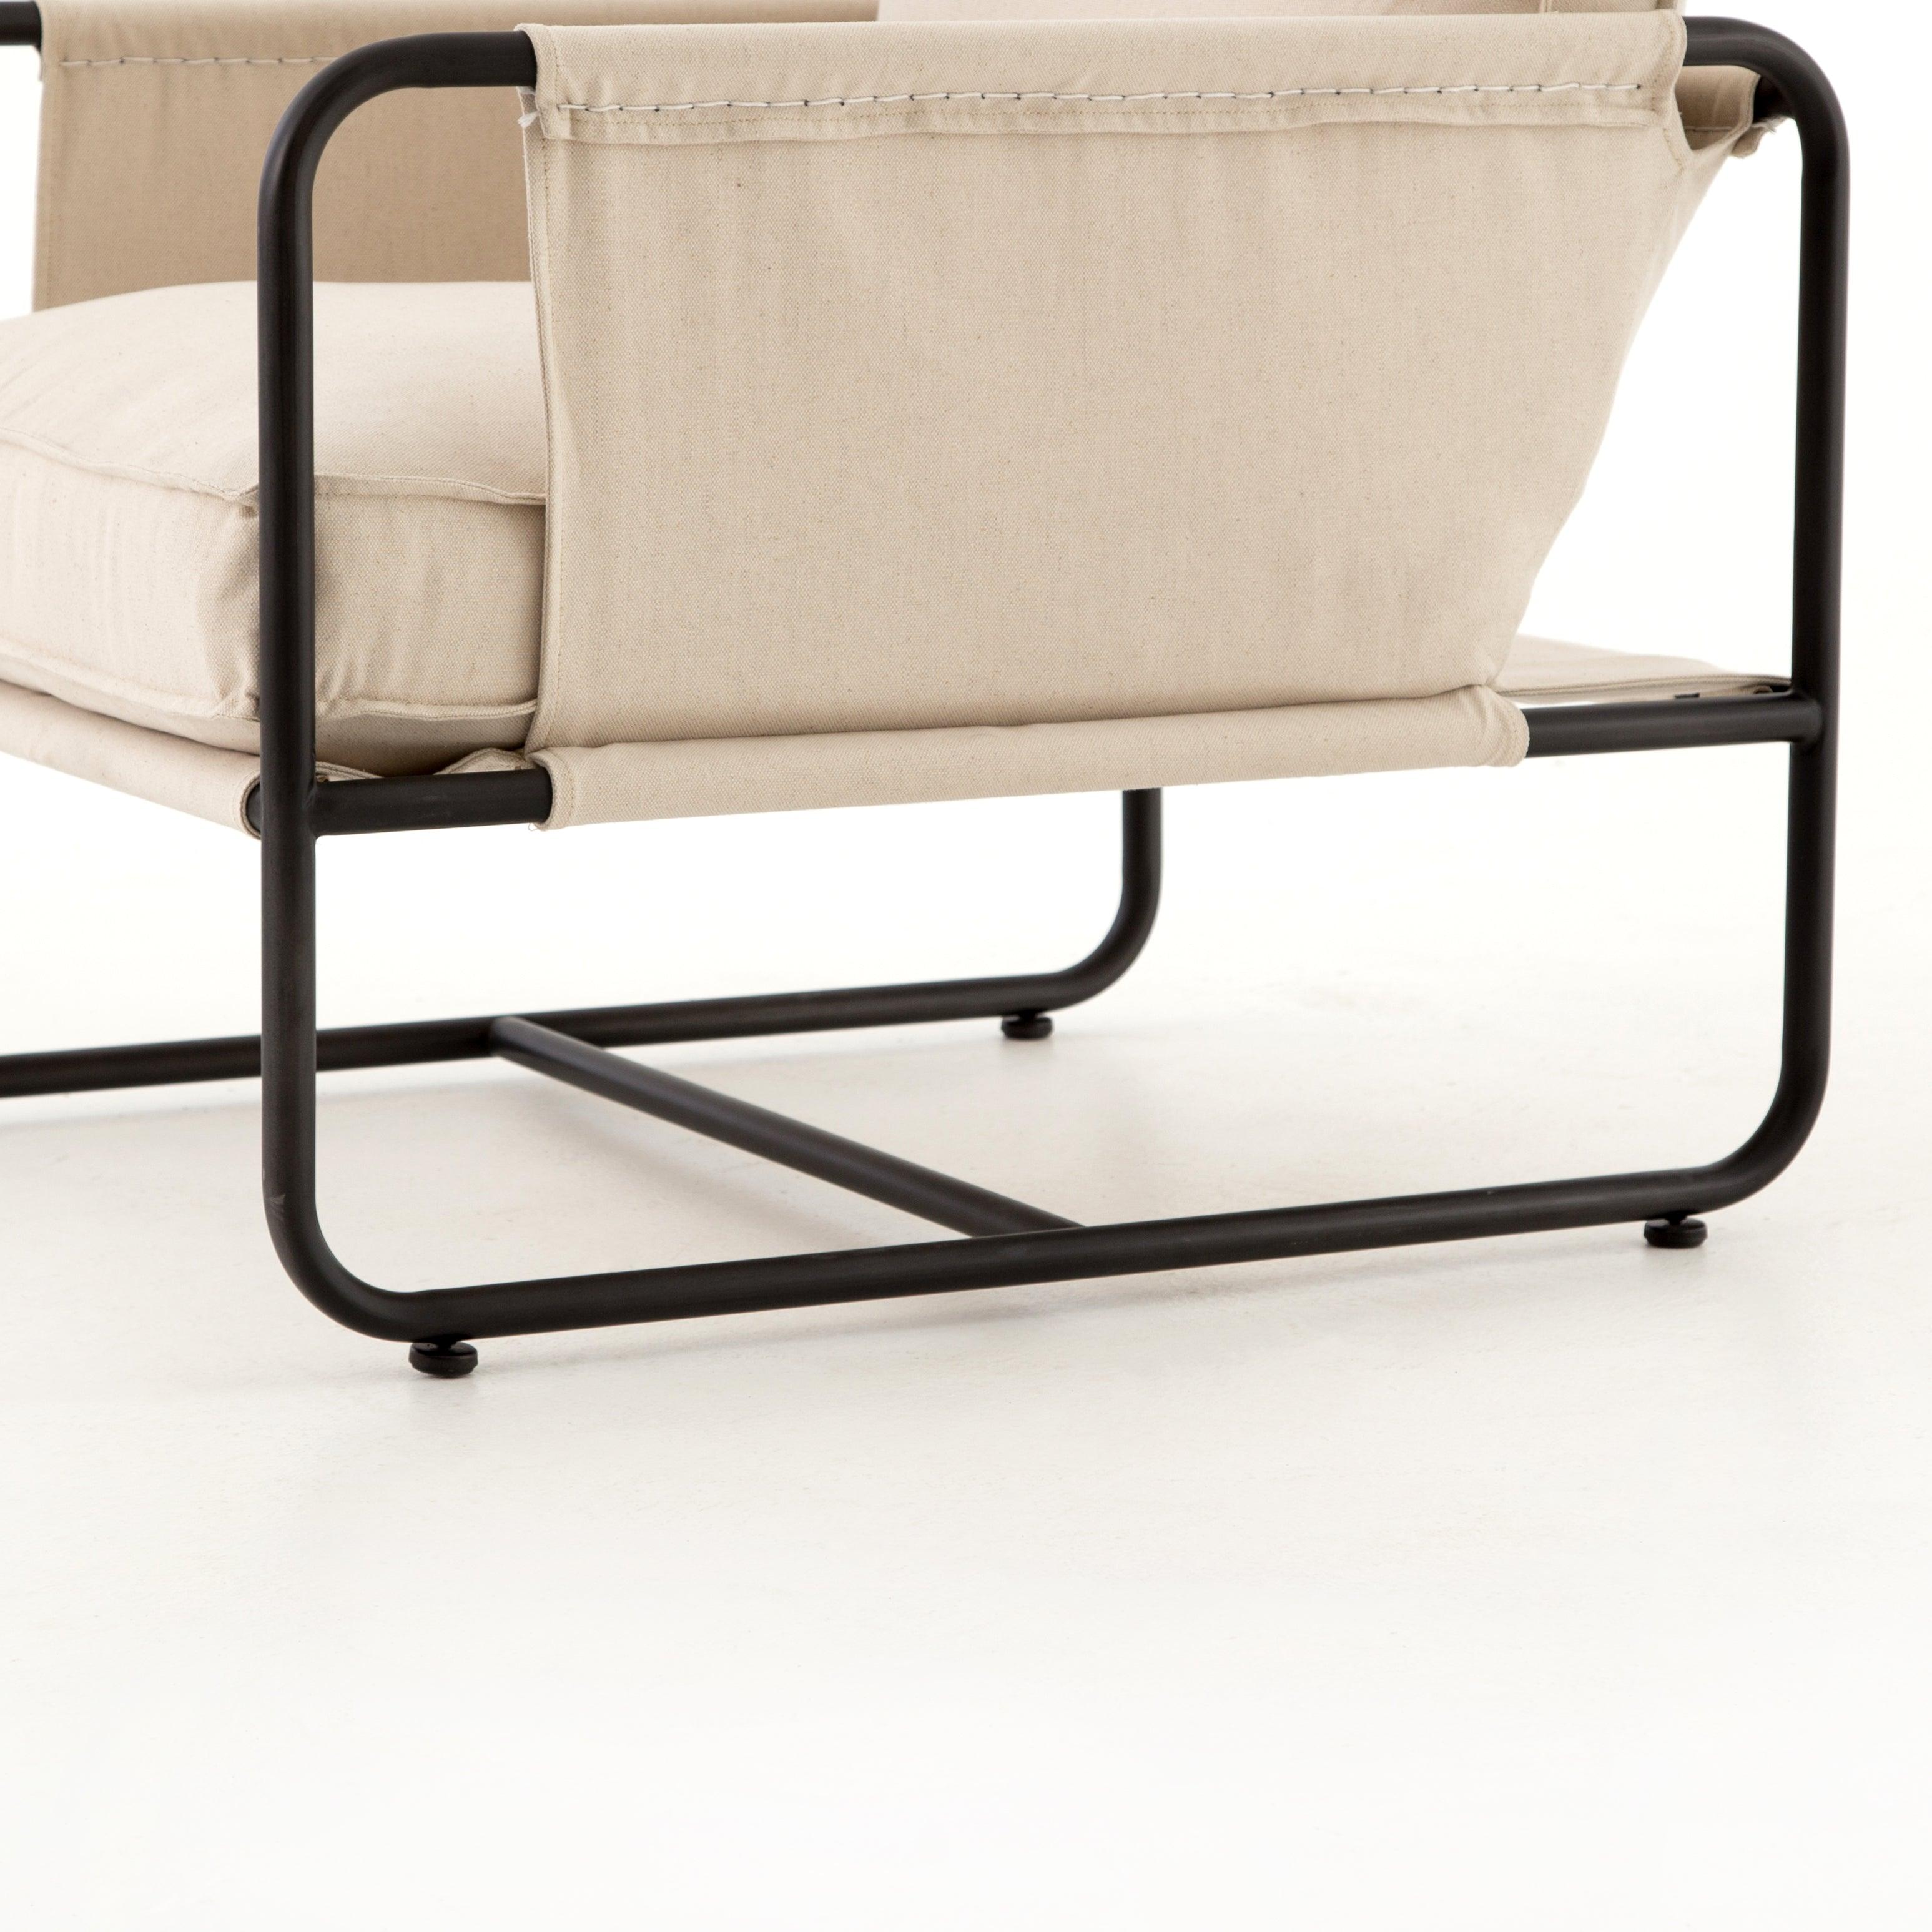 Isabel Chair - Reimagine Designs - Accent Chair, Armchair, new